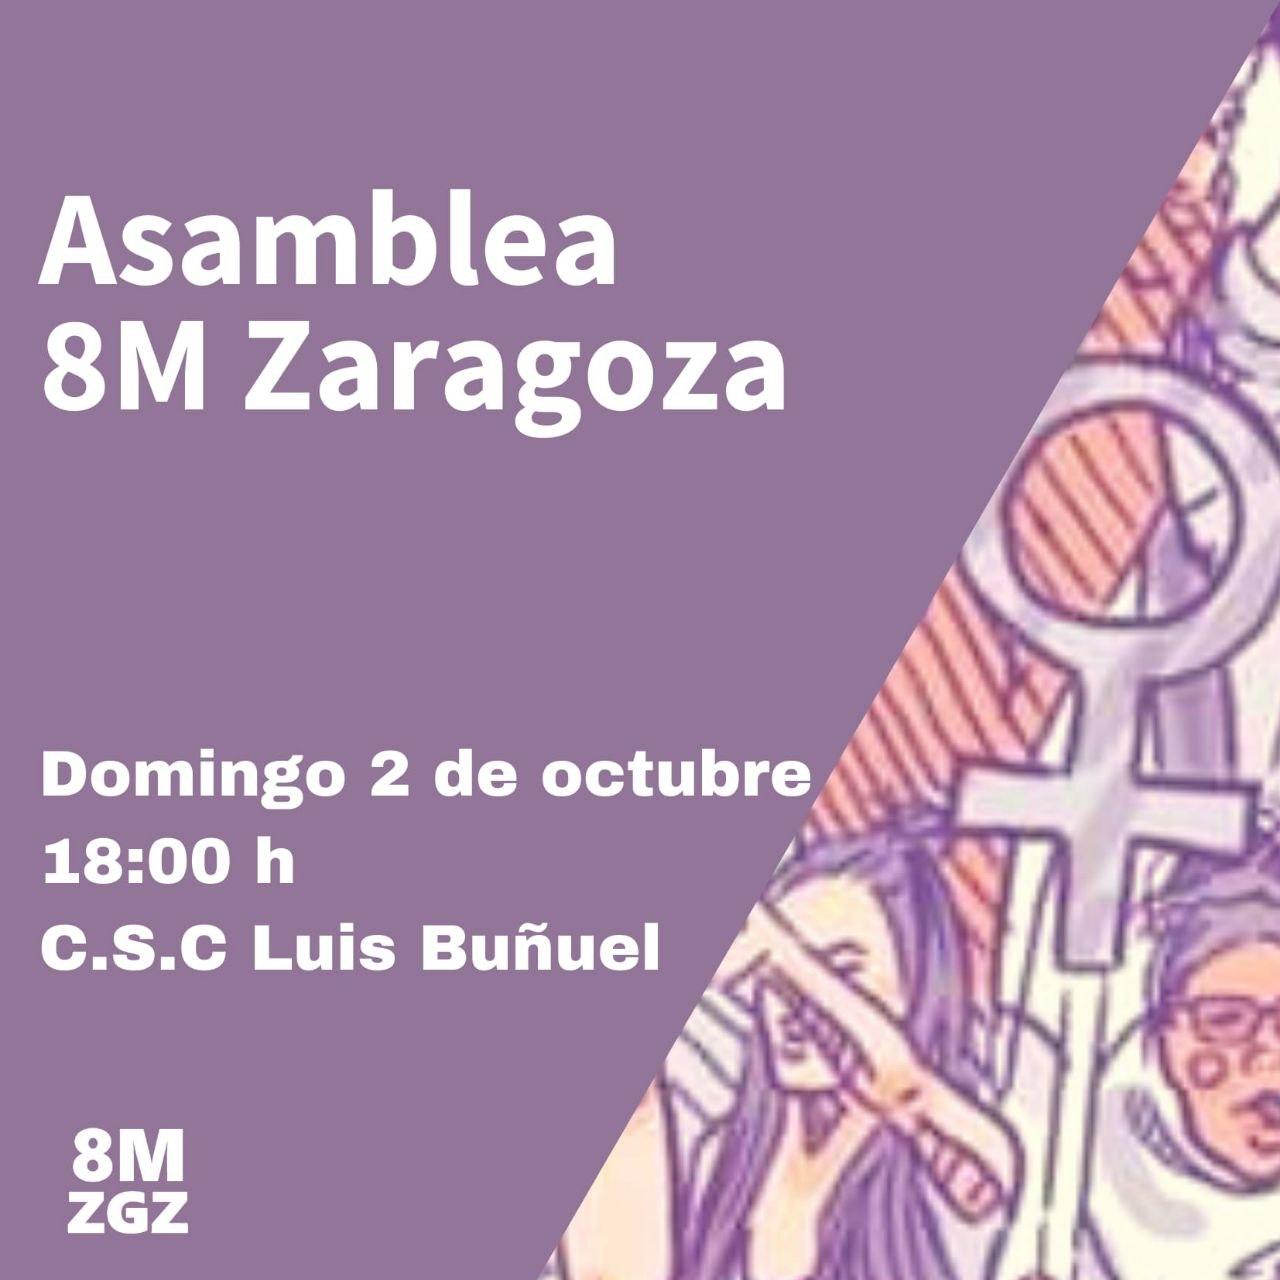 Asamblea 8M Zaragoza